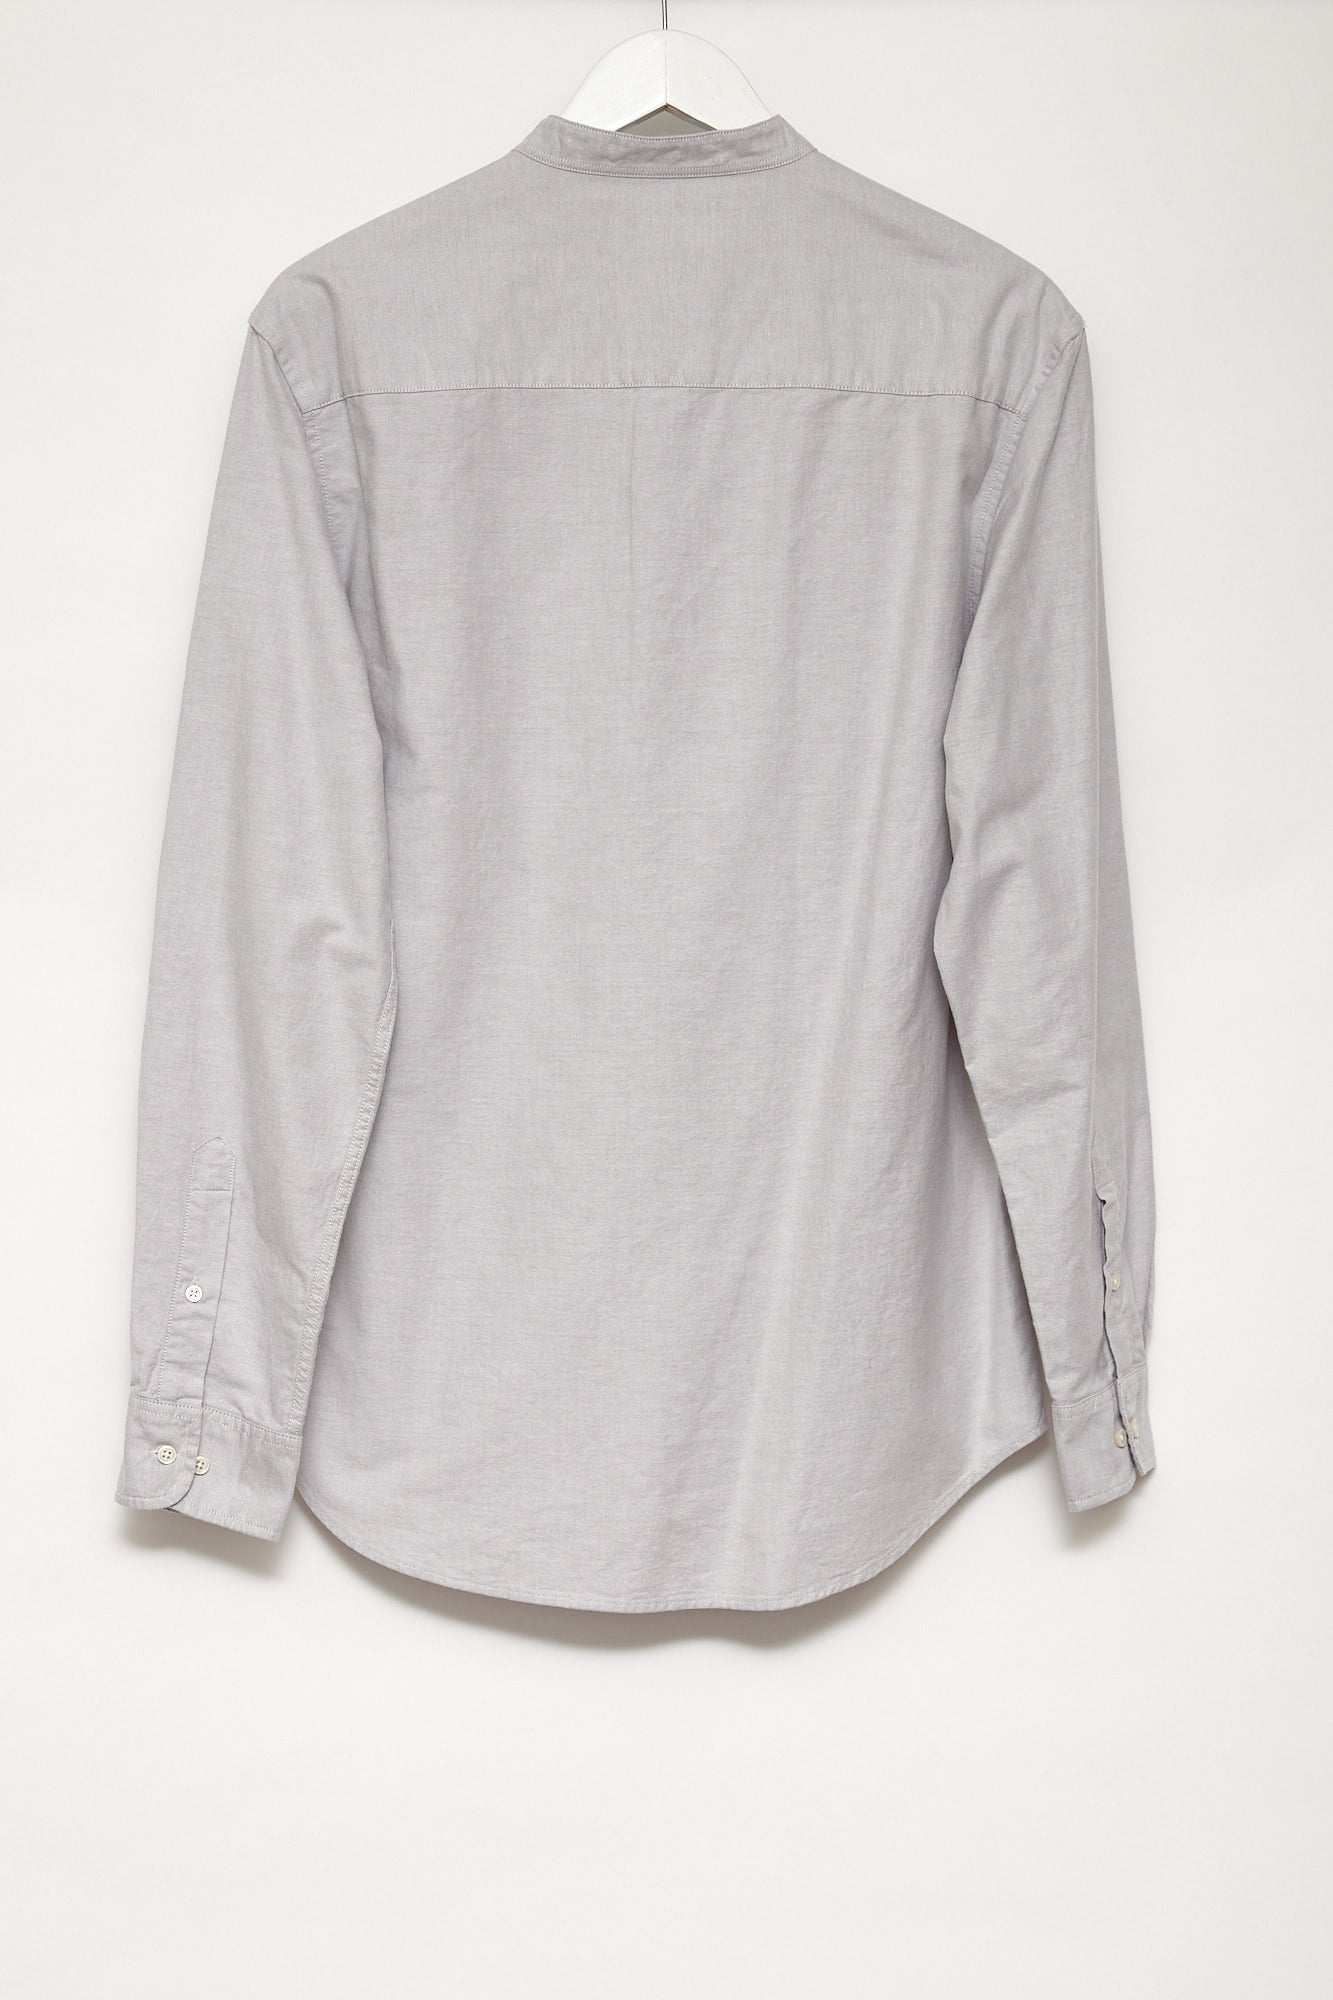 Mens Zara Grey collarless shirt size medium